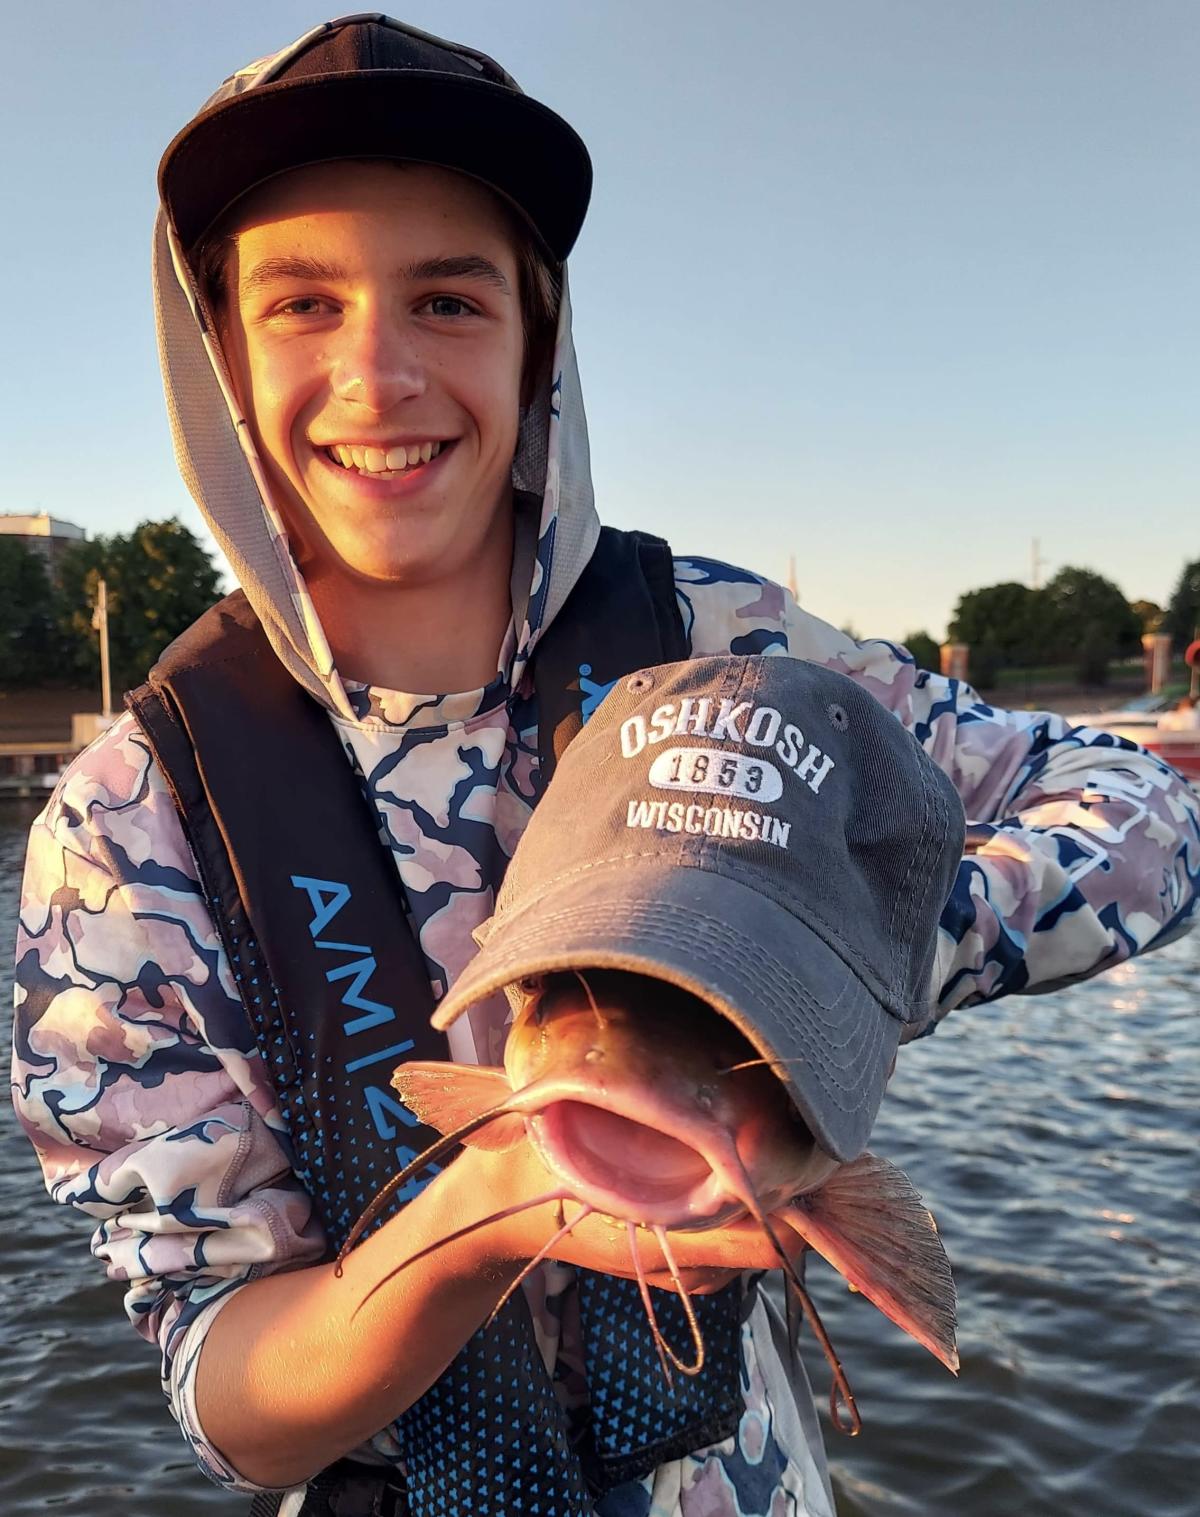 Fish with Oshkosh Hat